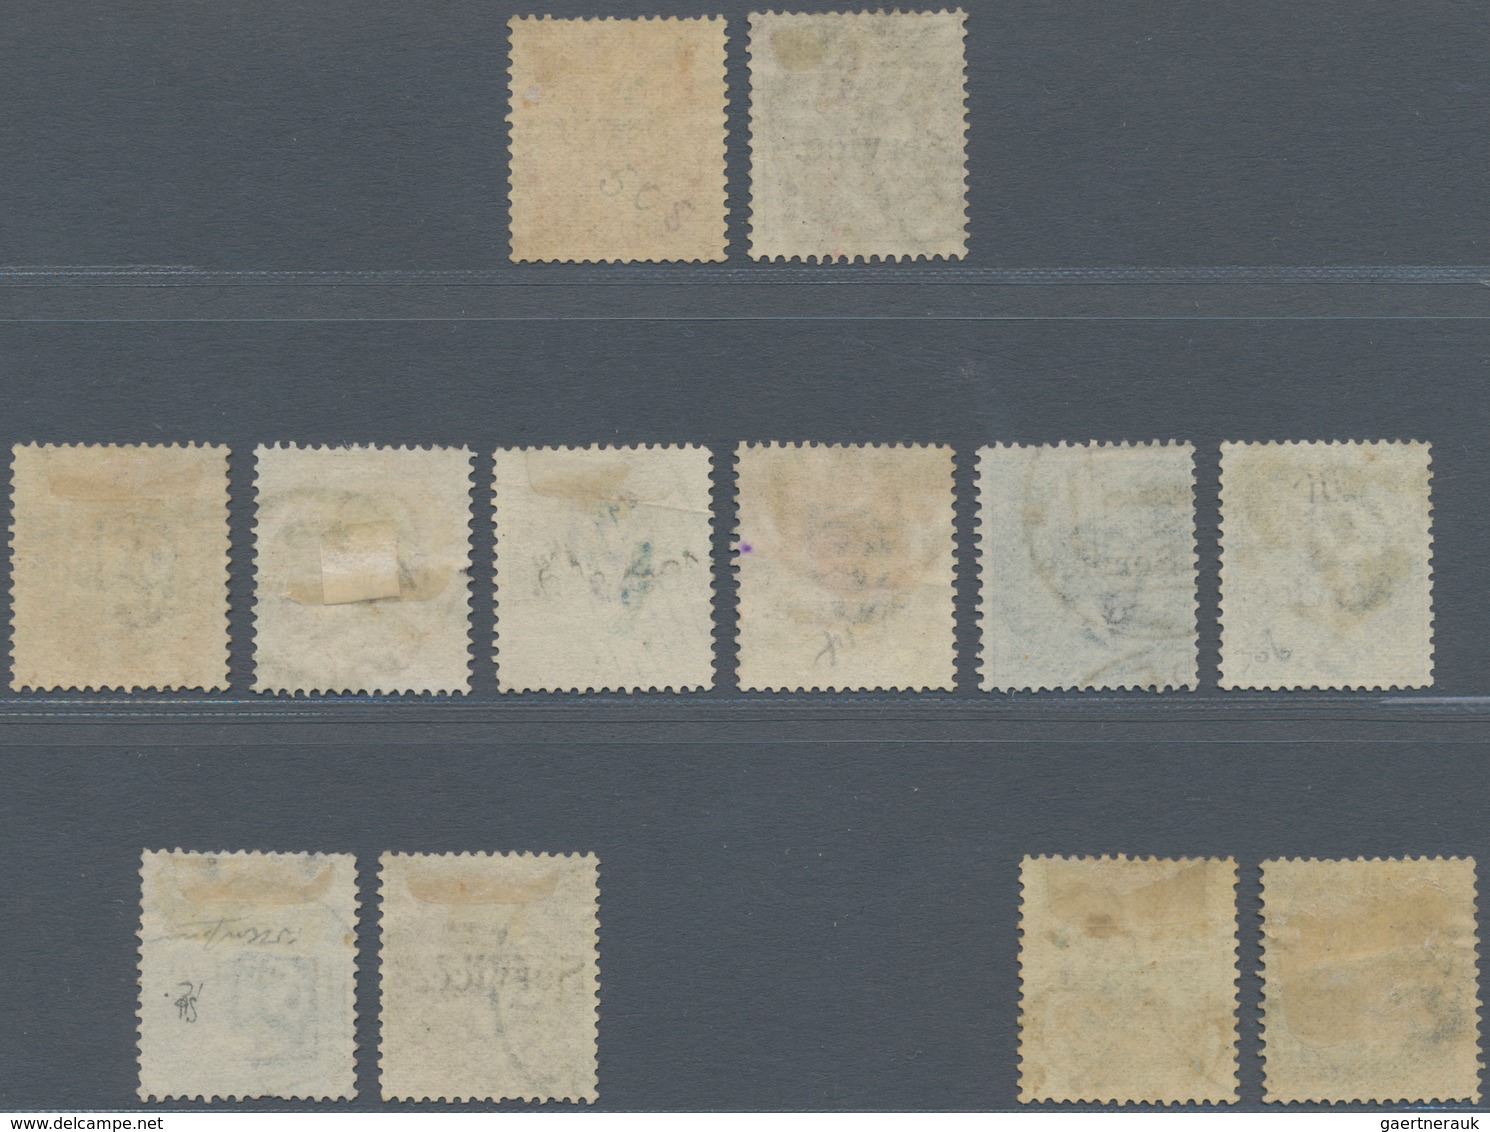 Indien - Dienstmarken: 1866-72 Set Of 10 QV Stamps With Small "Service" Ovpt. Plus Two Varieties, Wi - Dienstmarken